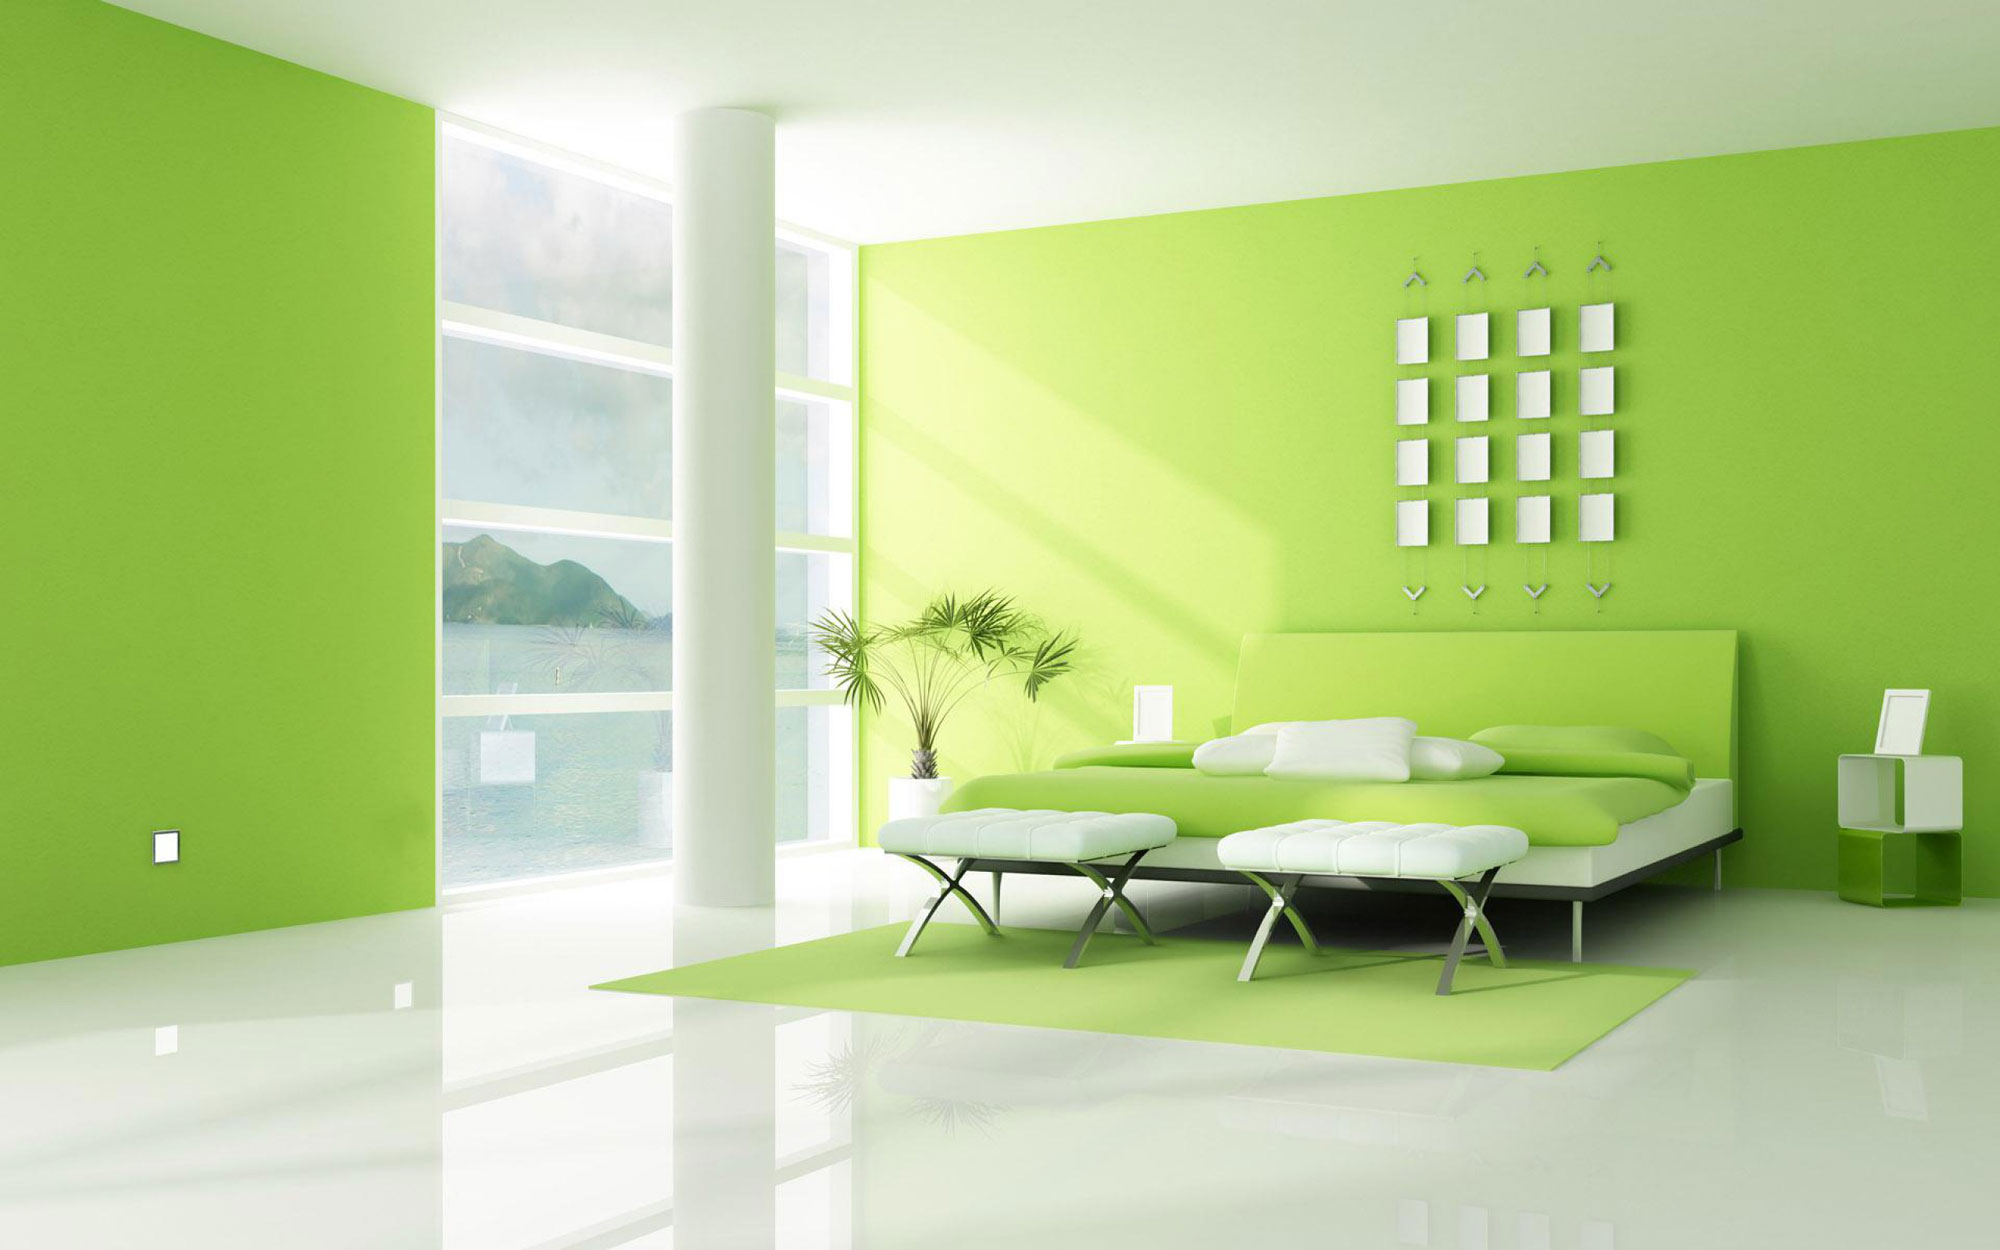 Wallpaper Hijau Tosca Green Turquoise Teal Aqua Leaf 653747 Wallpaperuse